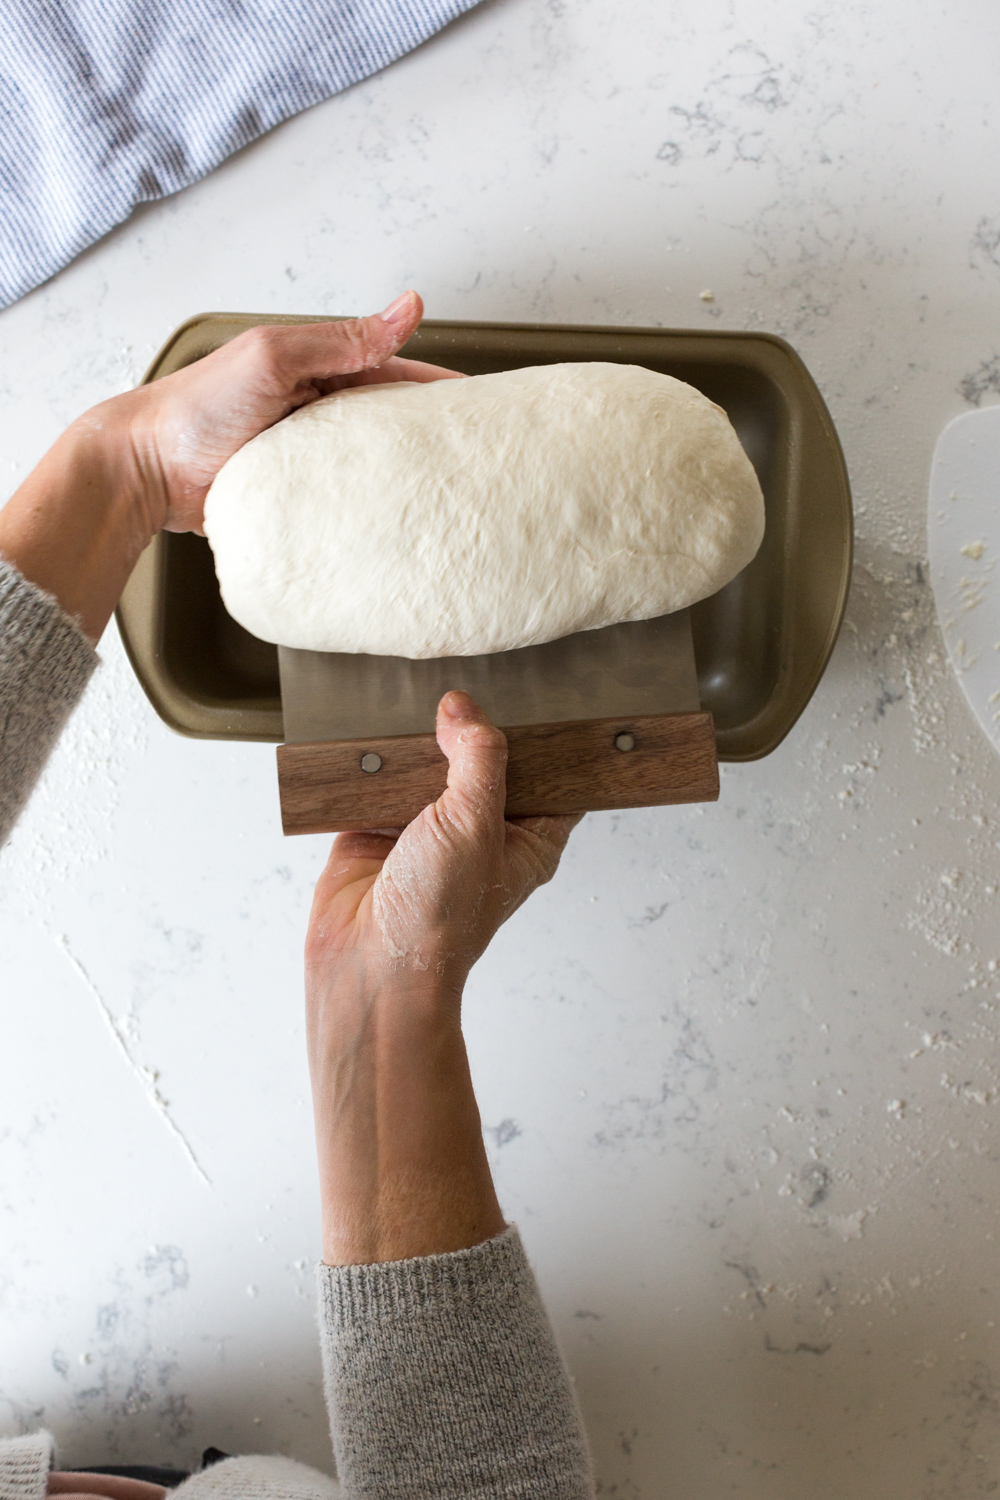 Transfer Best Basic White Bread dough into bread pan